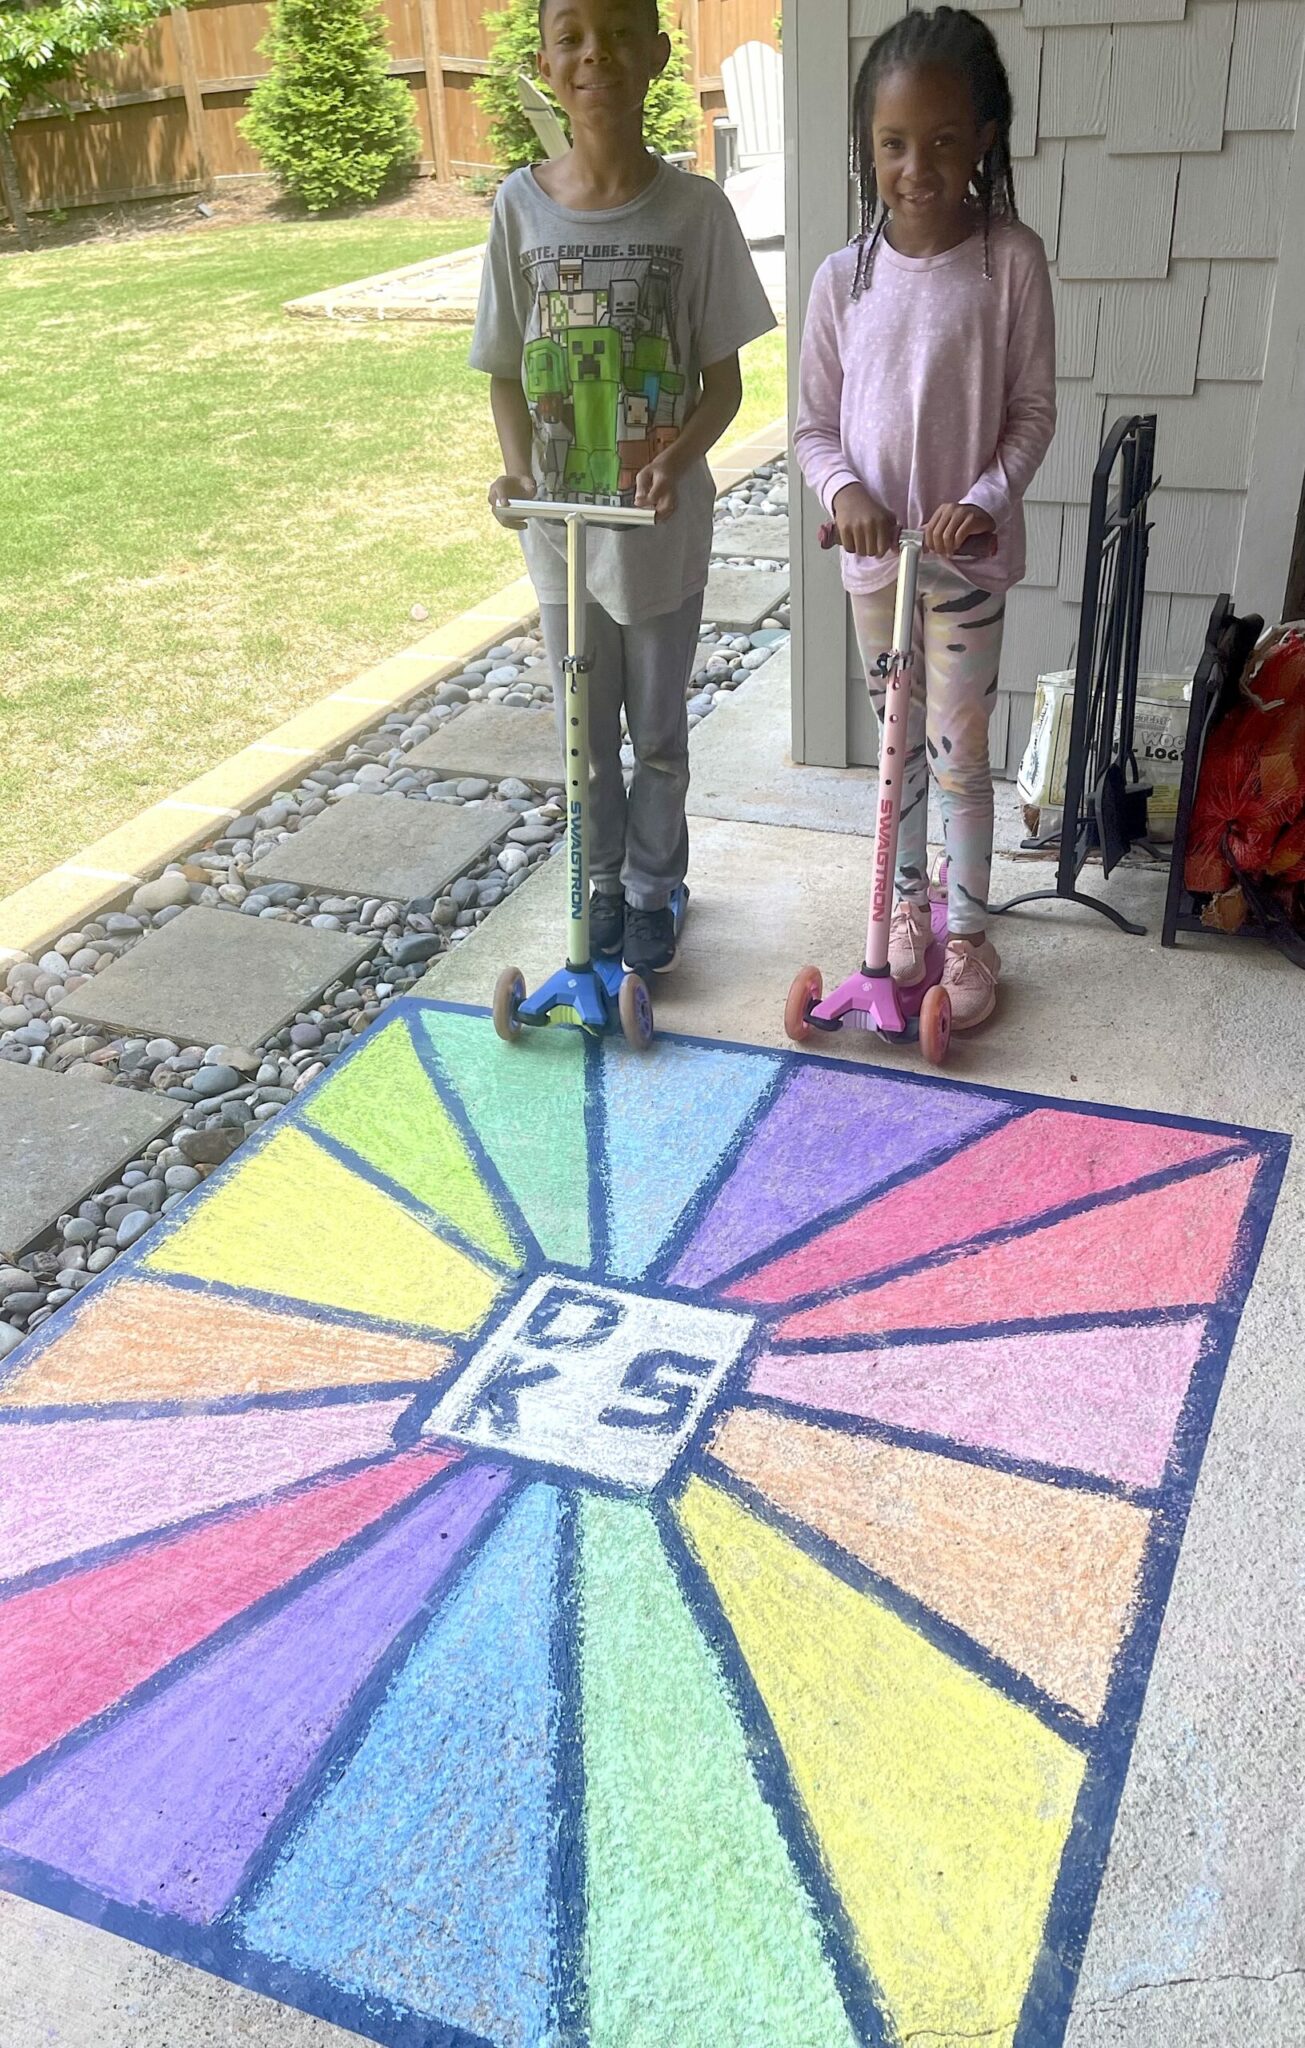 Chalk Art Idea for Kids - Toddler Approved